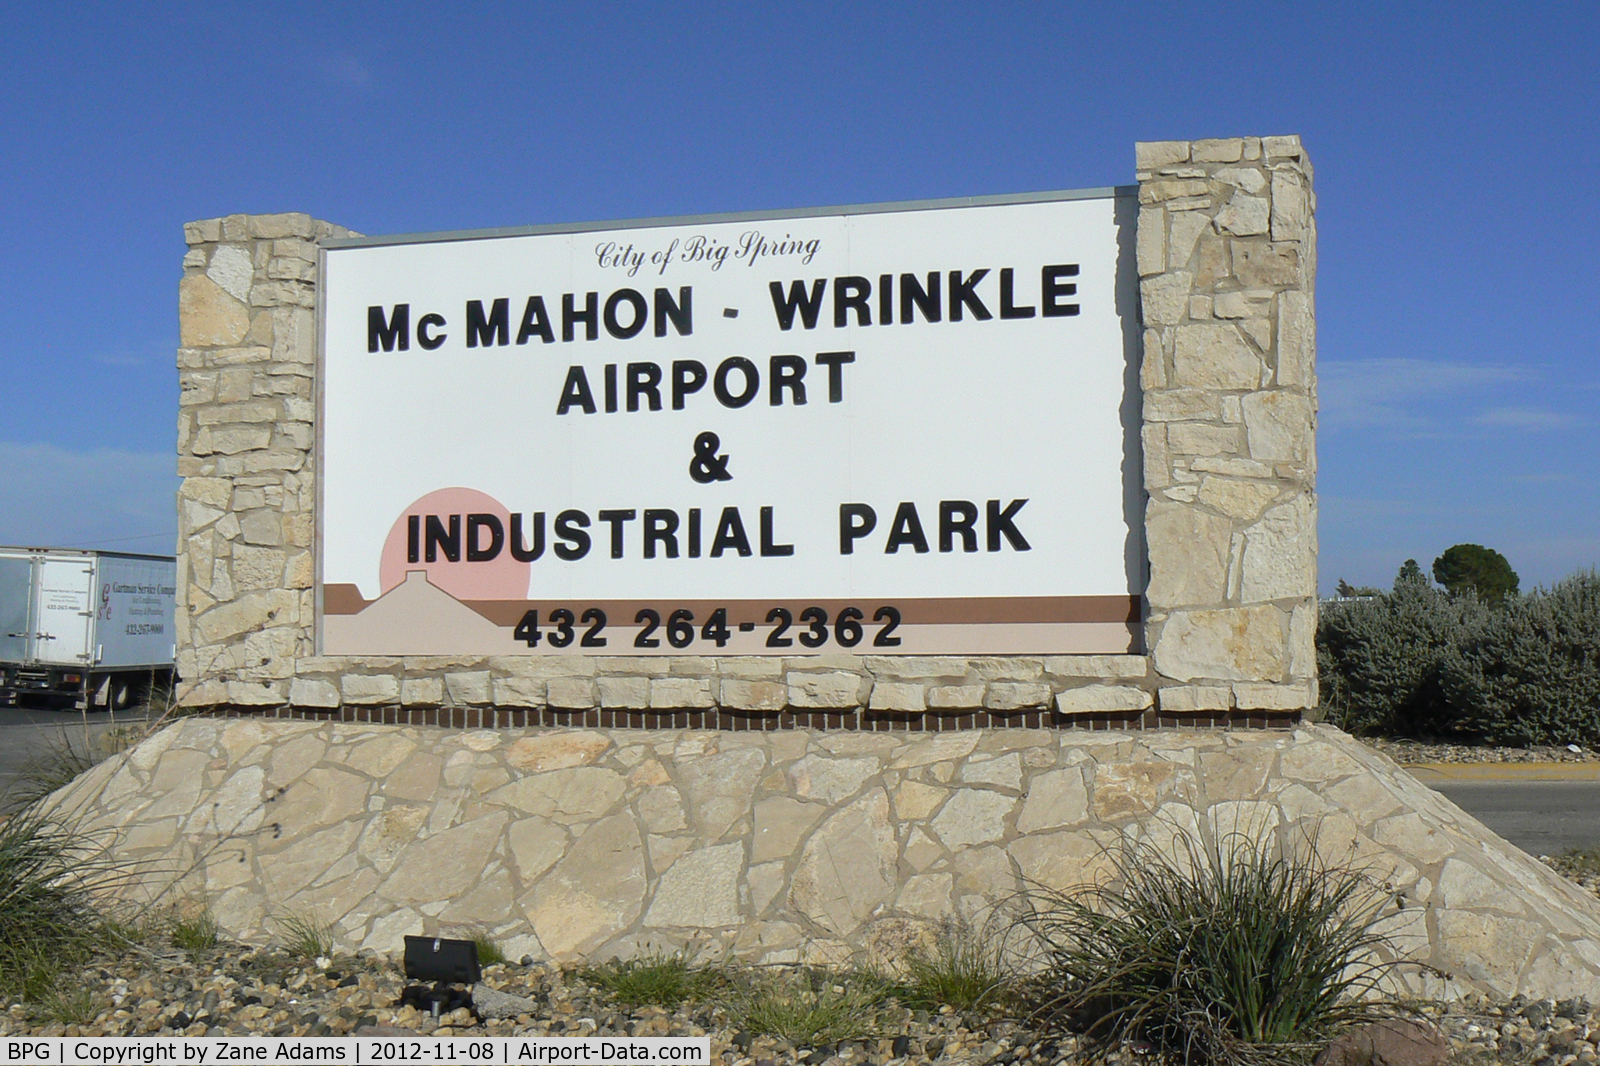 Big Spring Mc Mahon-wrinkle Airport (BPG) - Big Spring, Tx - The former Webb Air Force Base